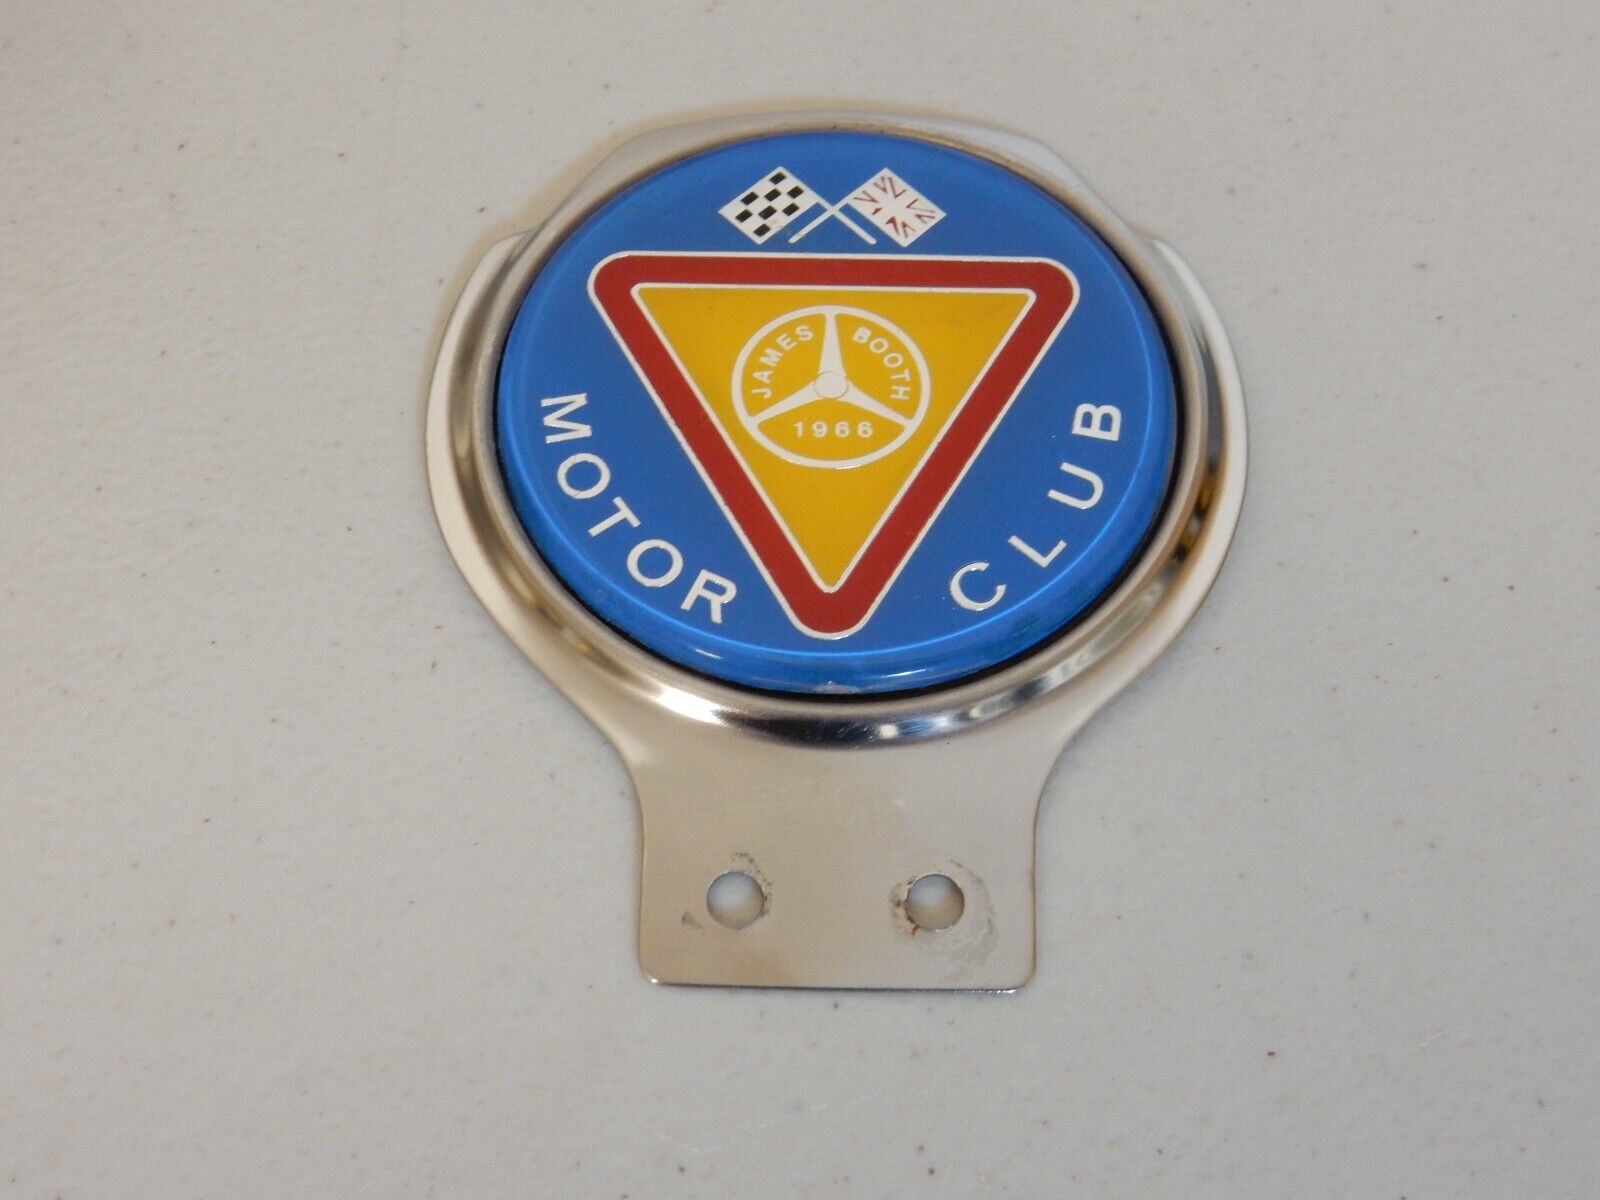 Vintage Chrome Renamel James Booth 1966 Motor Club Car Badge Auto Emblem